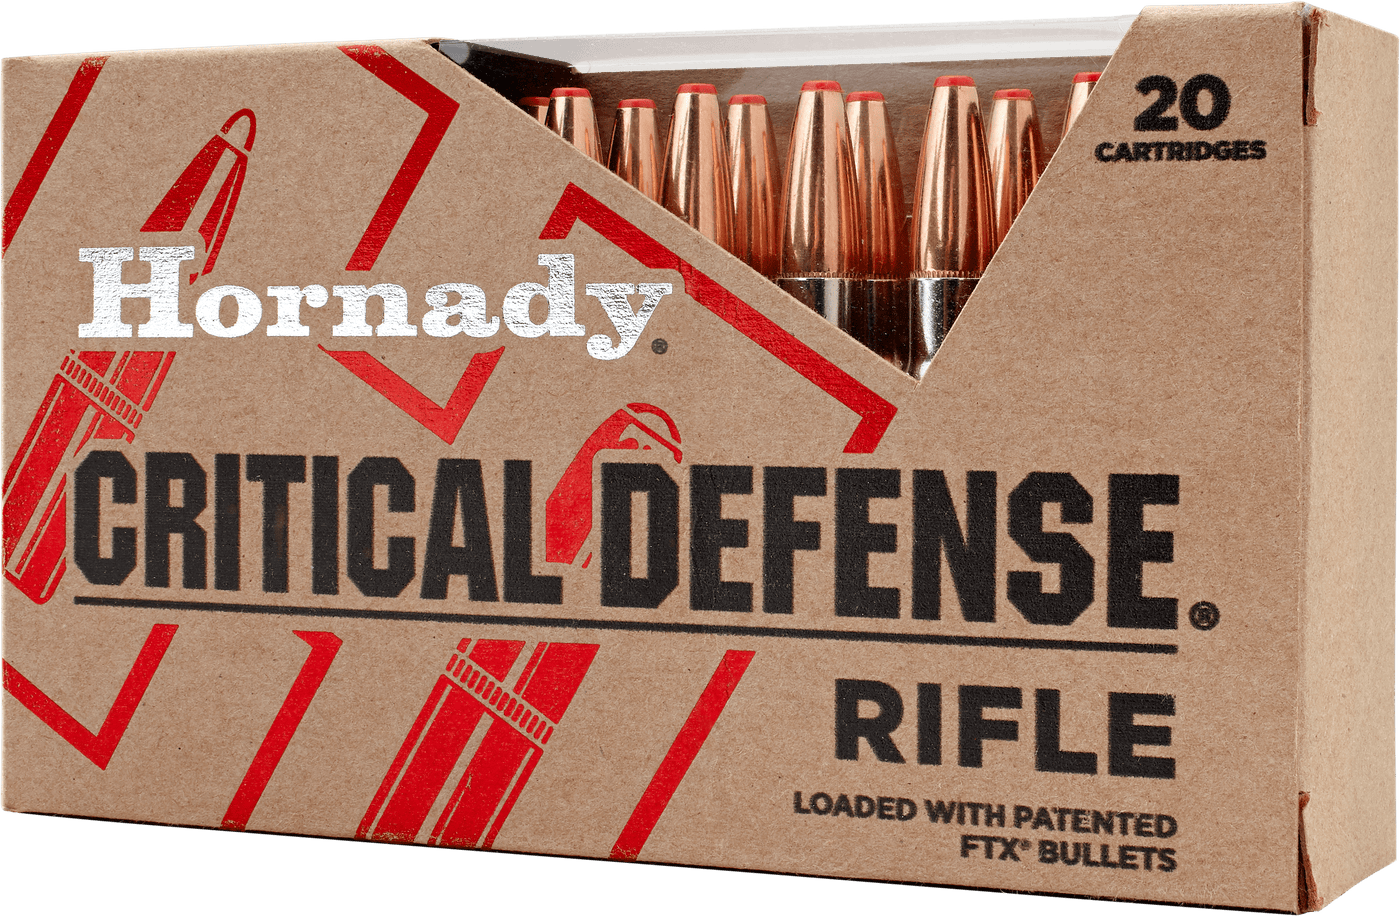 Hornady Hornady Critical Defense Rifle Ammo 223 Rem. 73 Gr. Ftx 20 Rd. Ammo